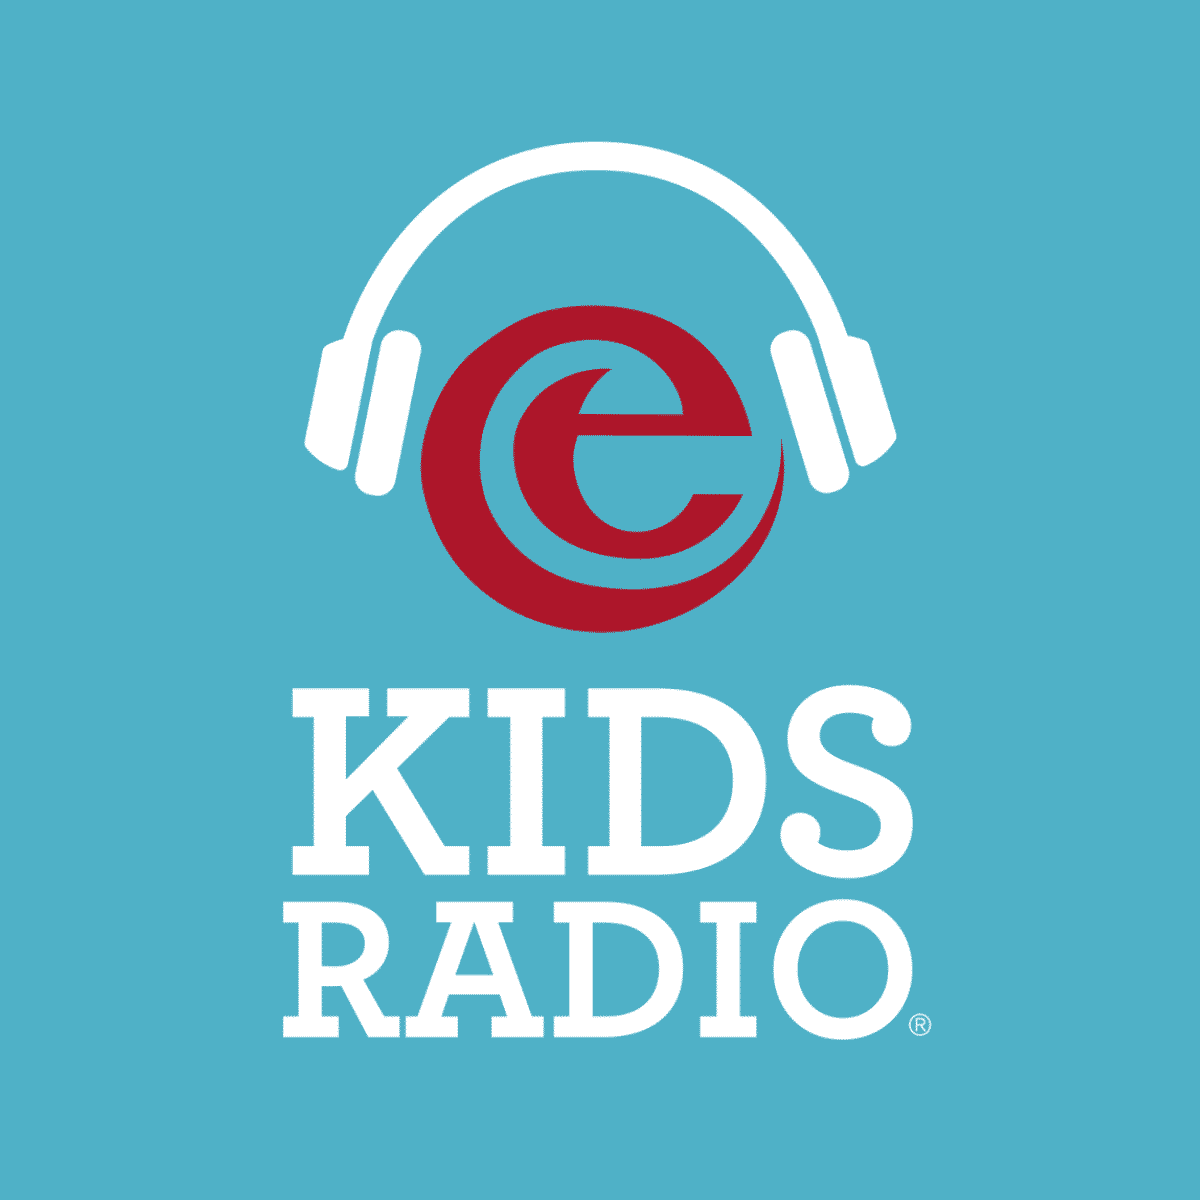 Efteling kids Radio